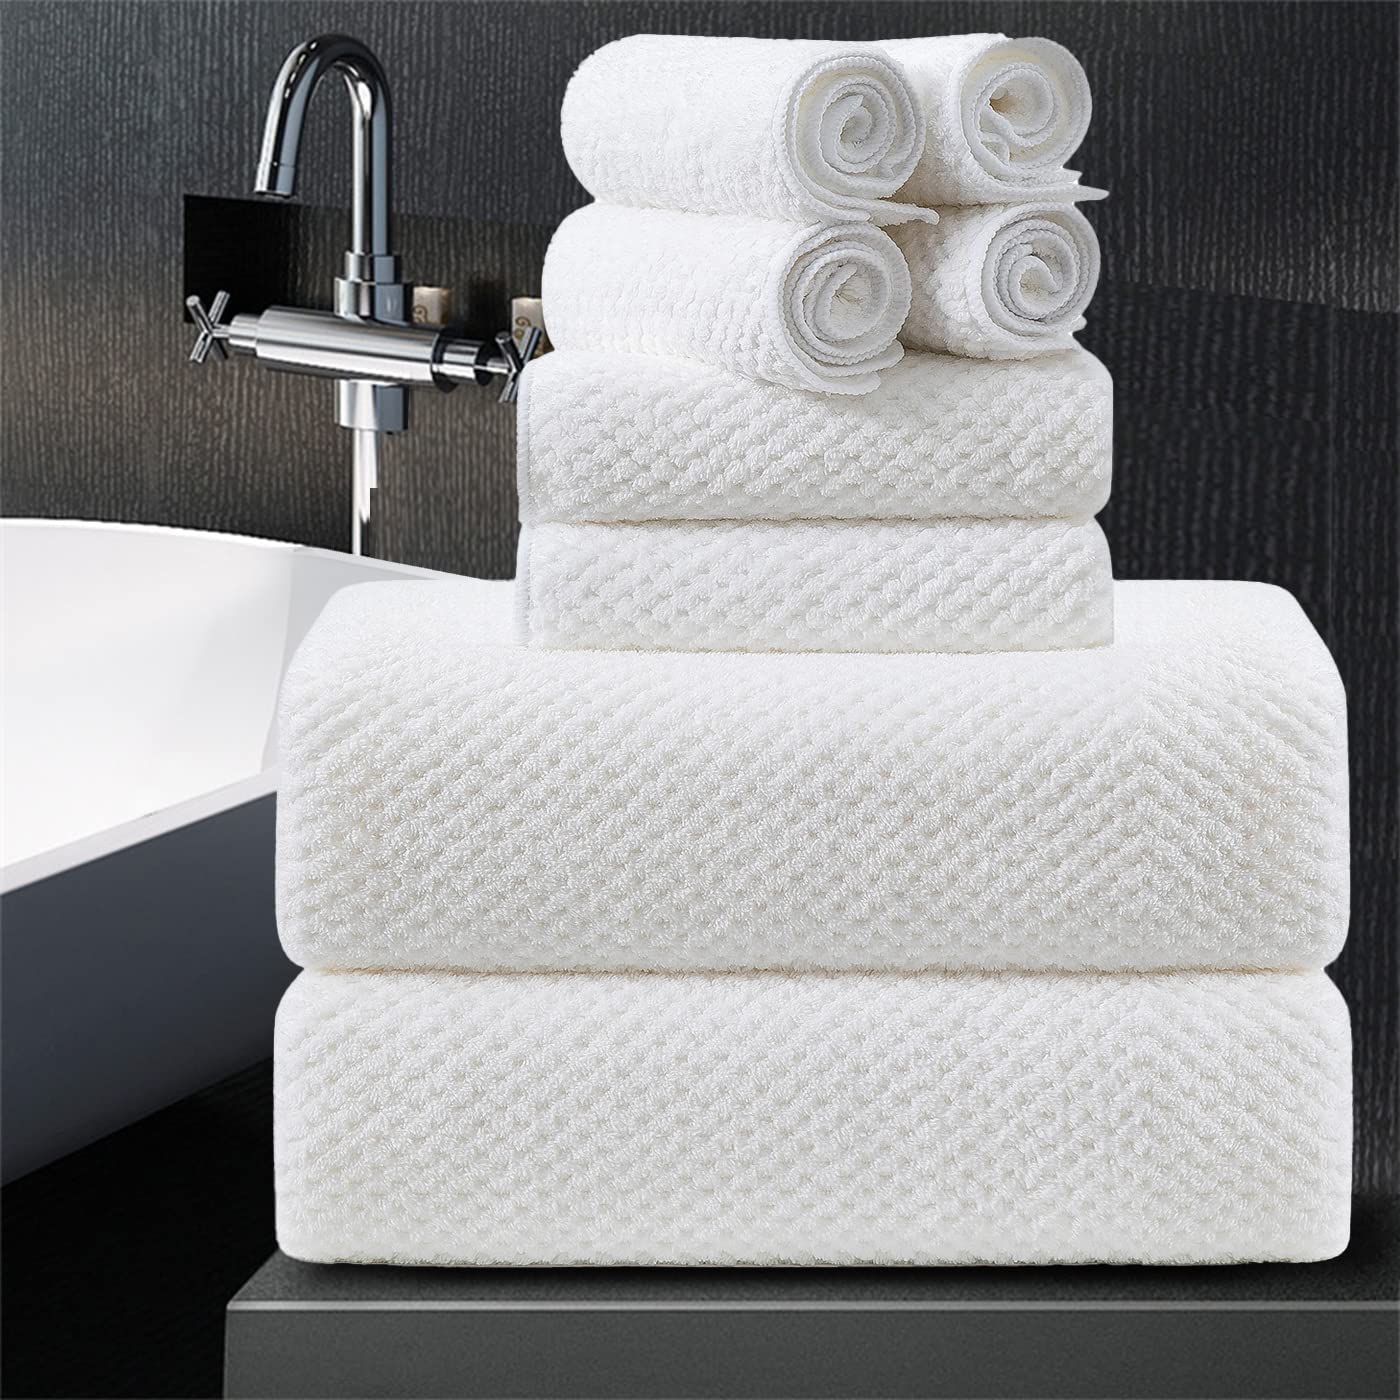 Bath Towel Set 4Pack-35x70 Towel,600GSM Ultra Soft Microfibers